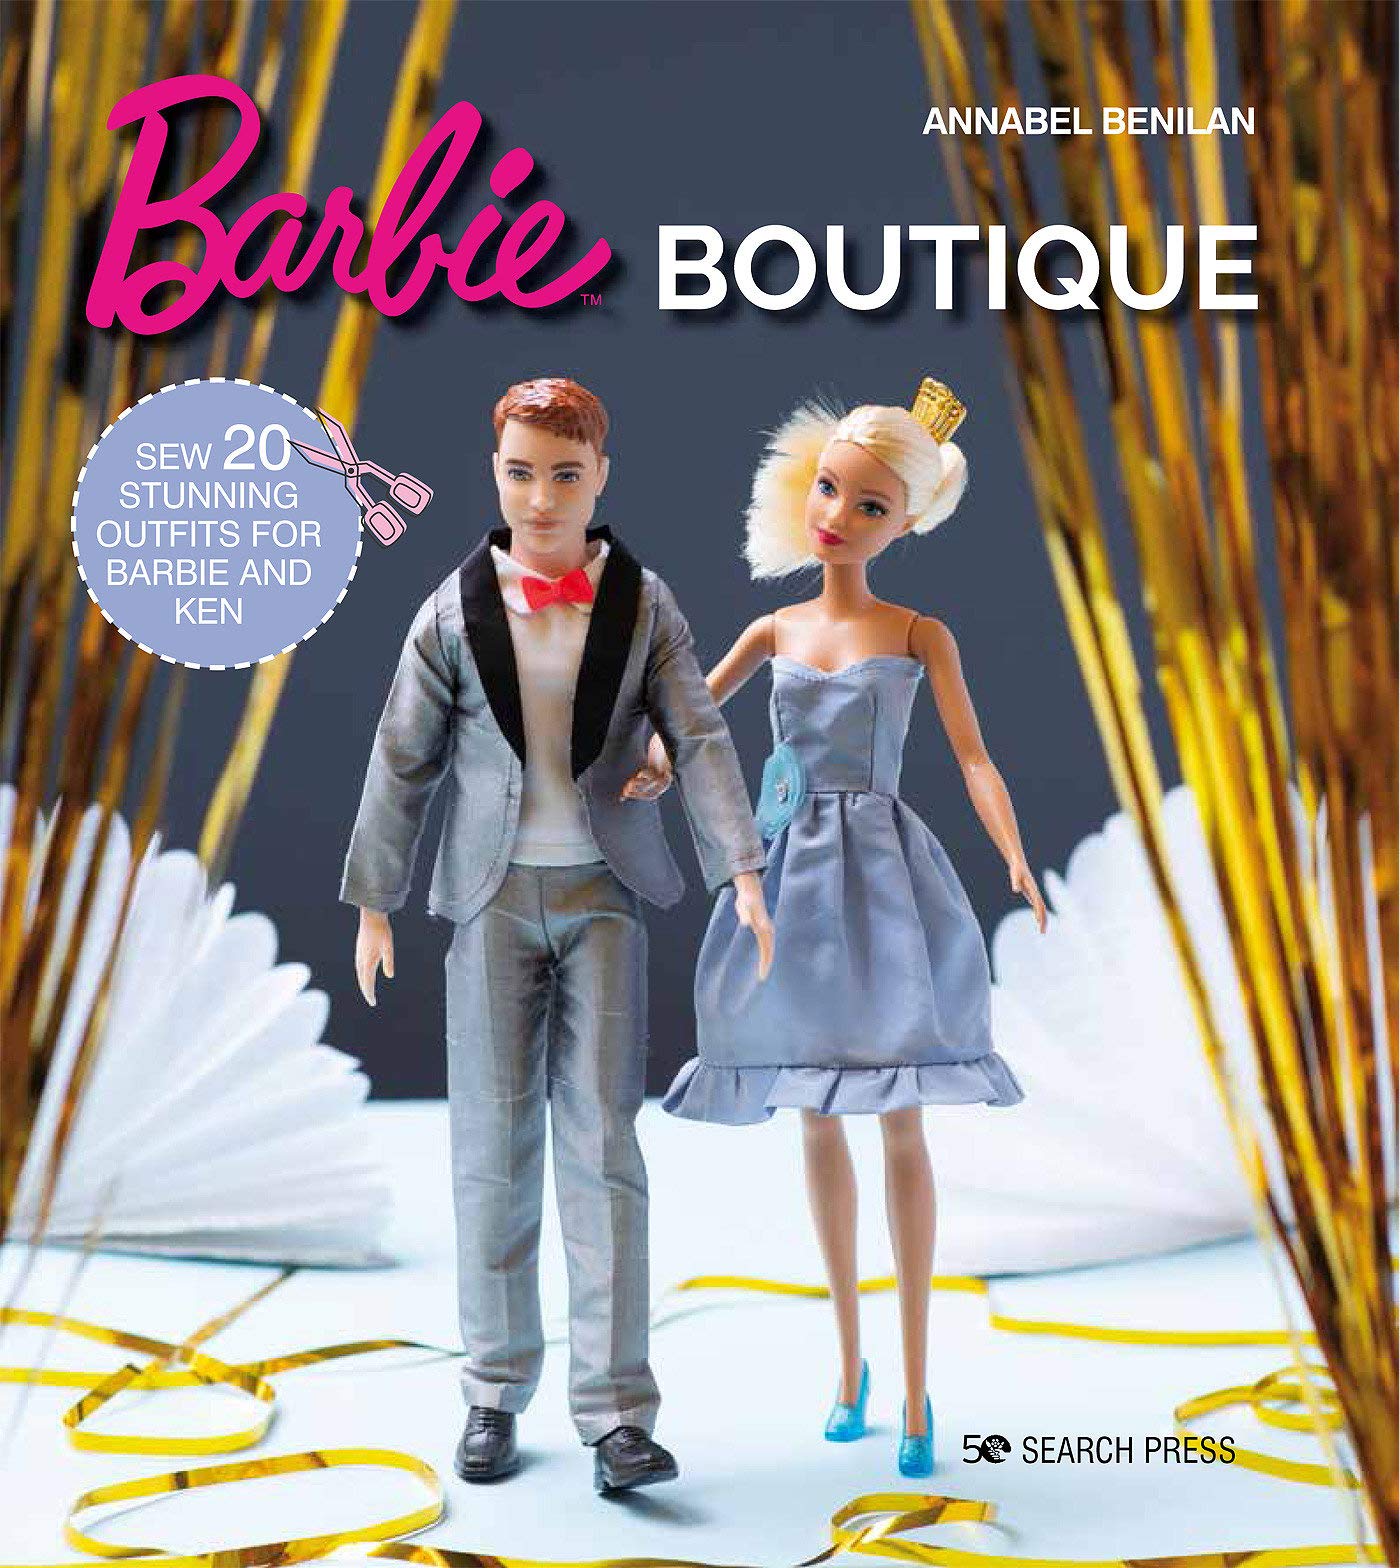 Barbie Boutique by Annabel Benilan